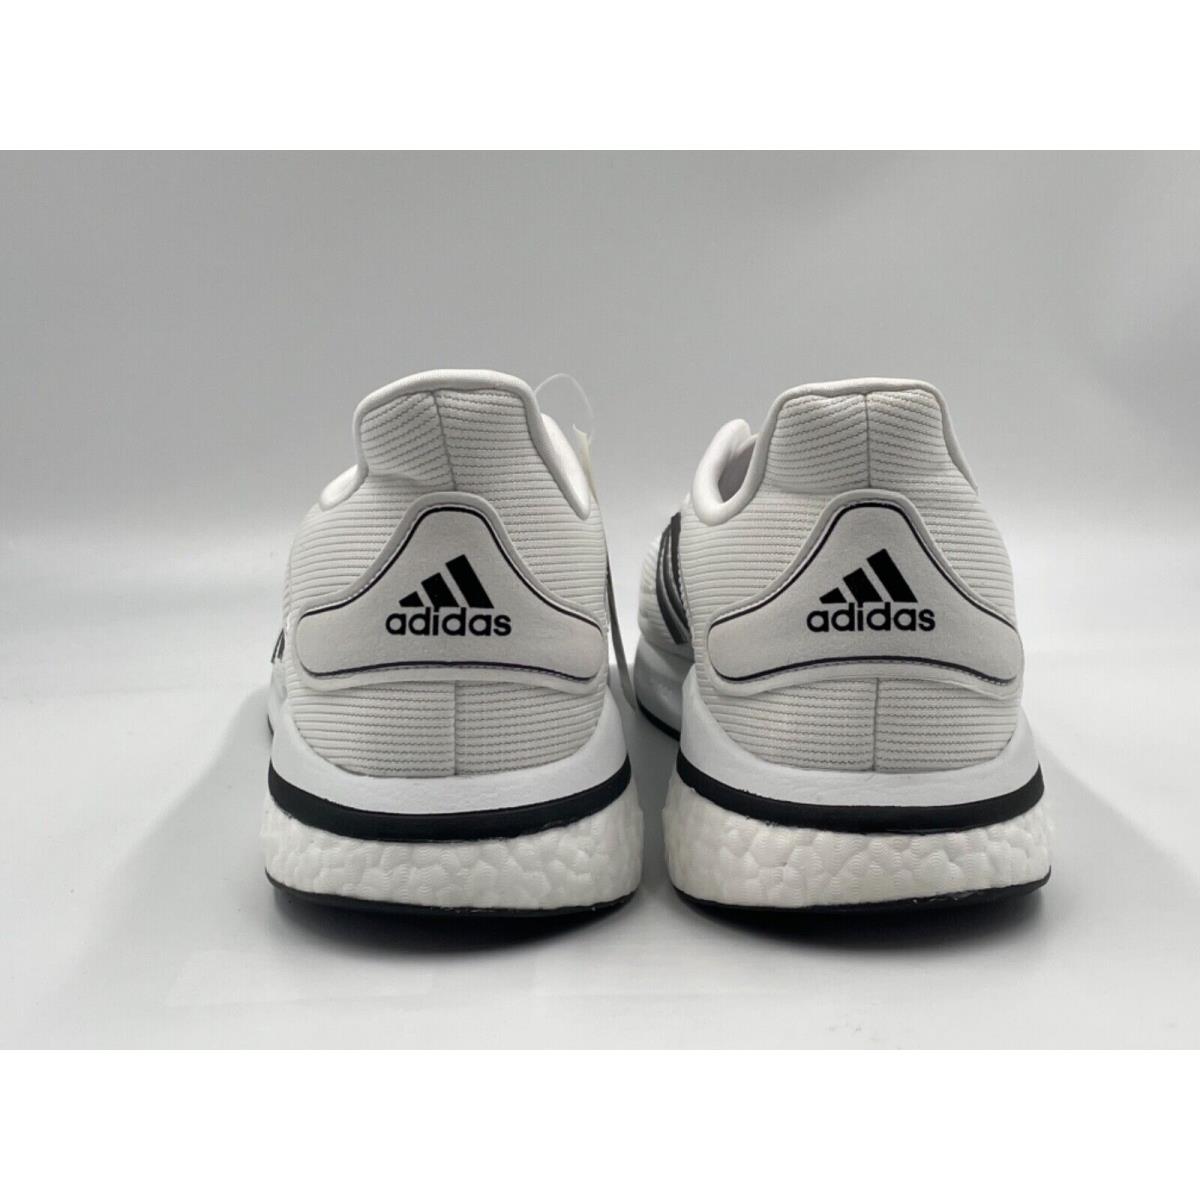 Adidas shoes Supernova - White Black Gray 6